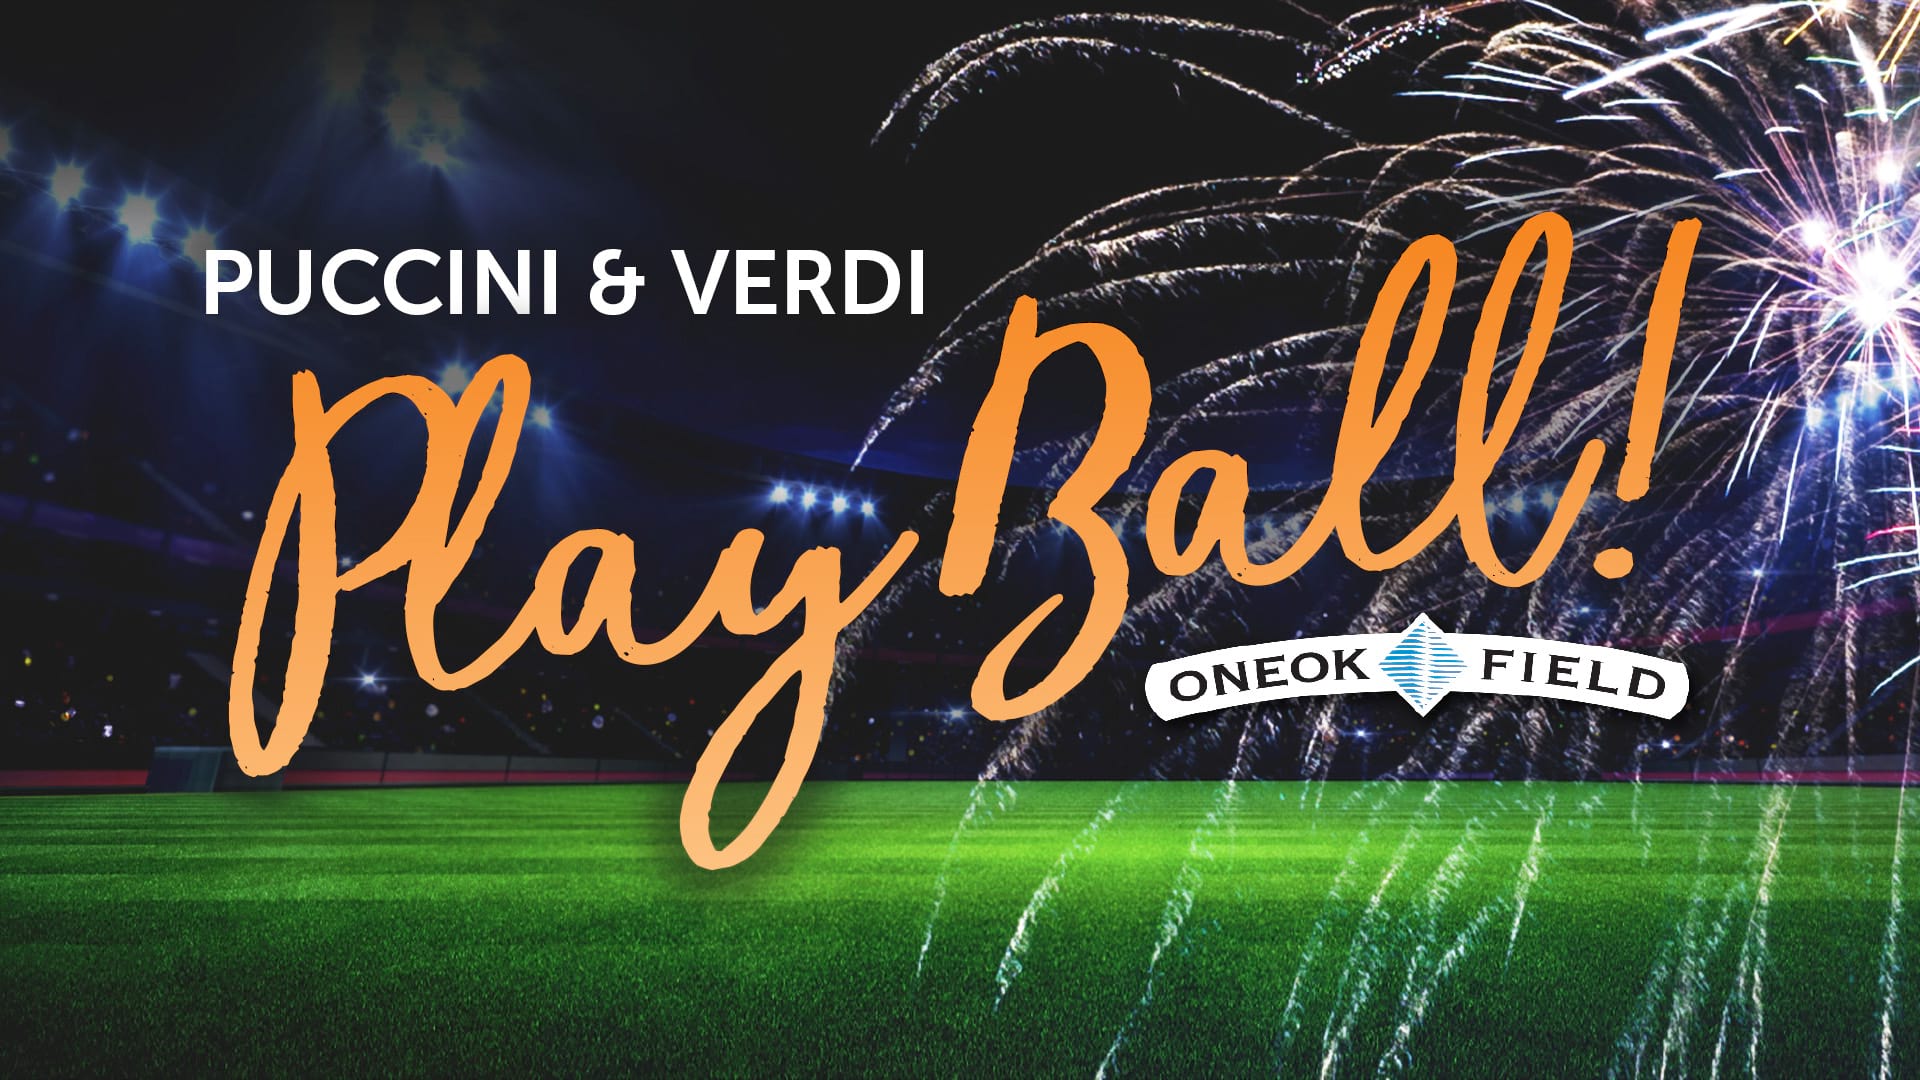 Puccini & Verdi Play Ball